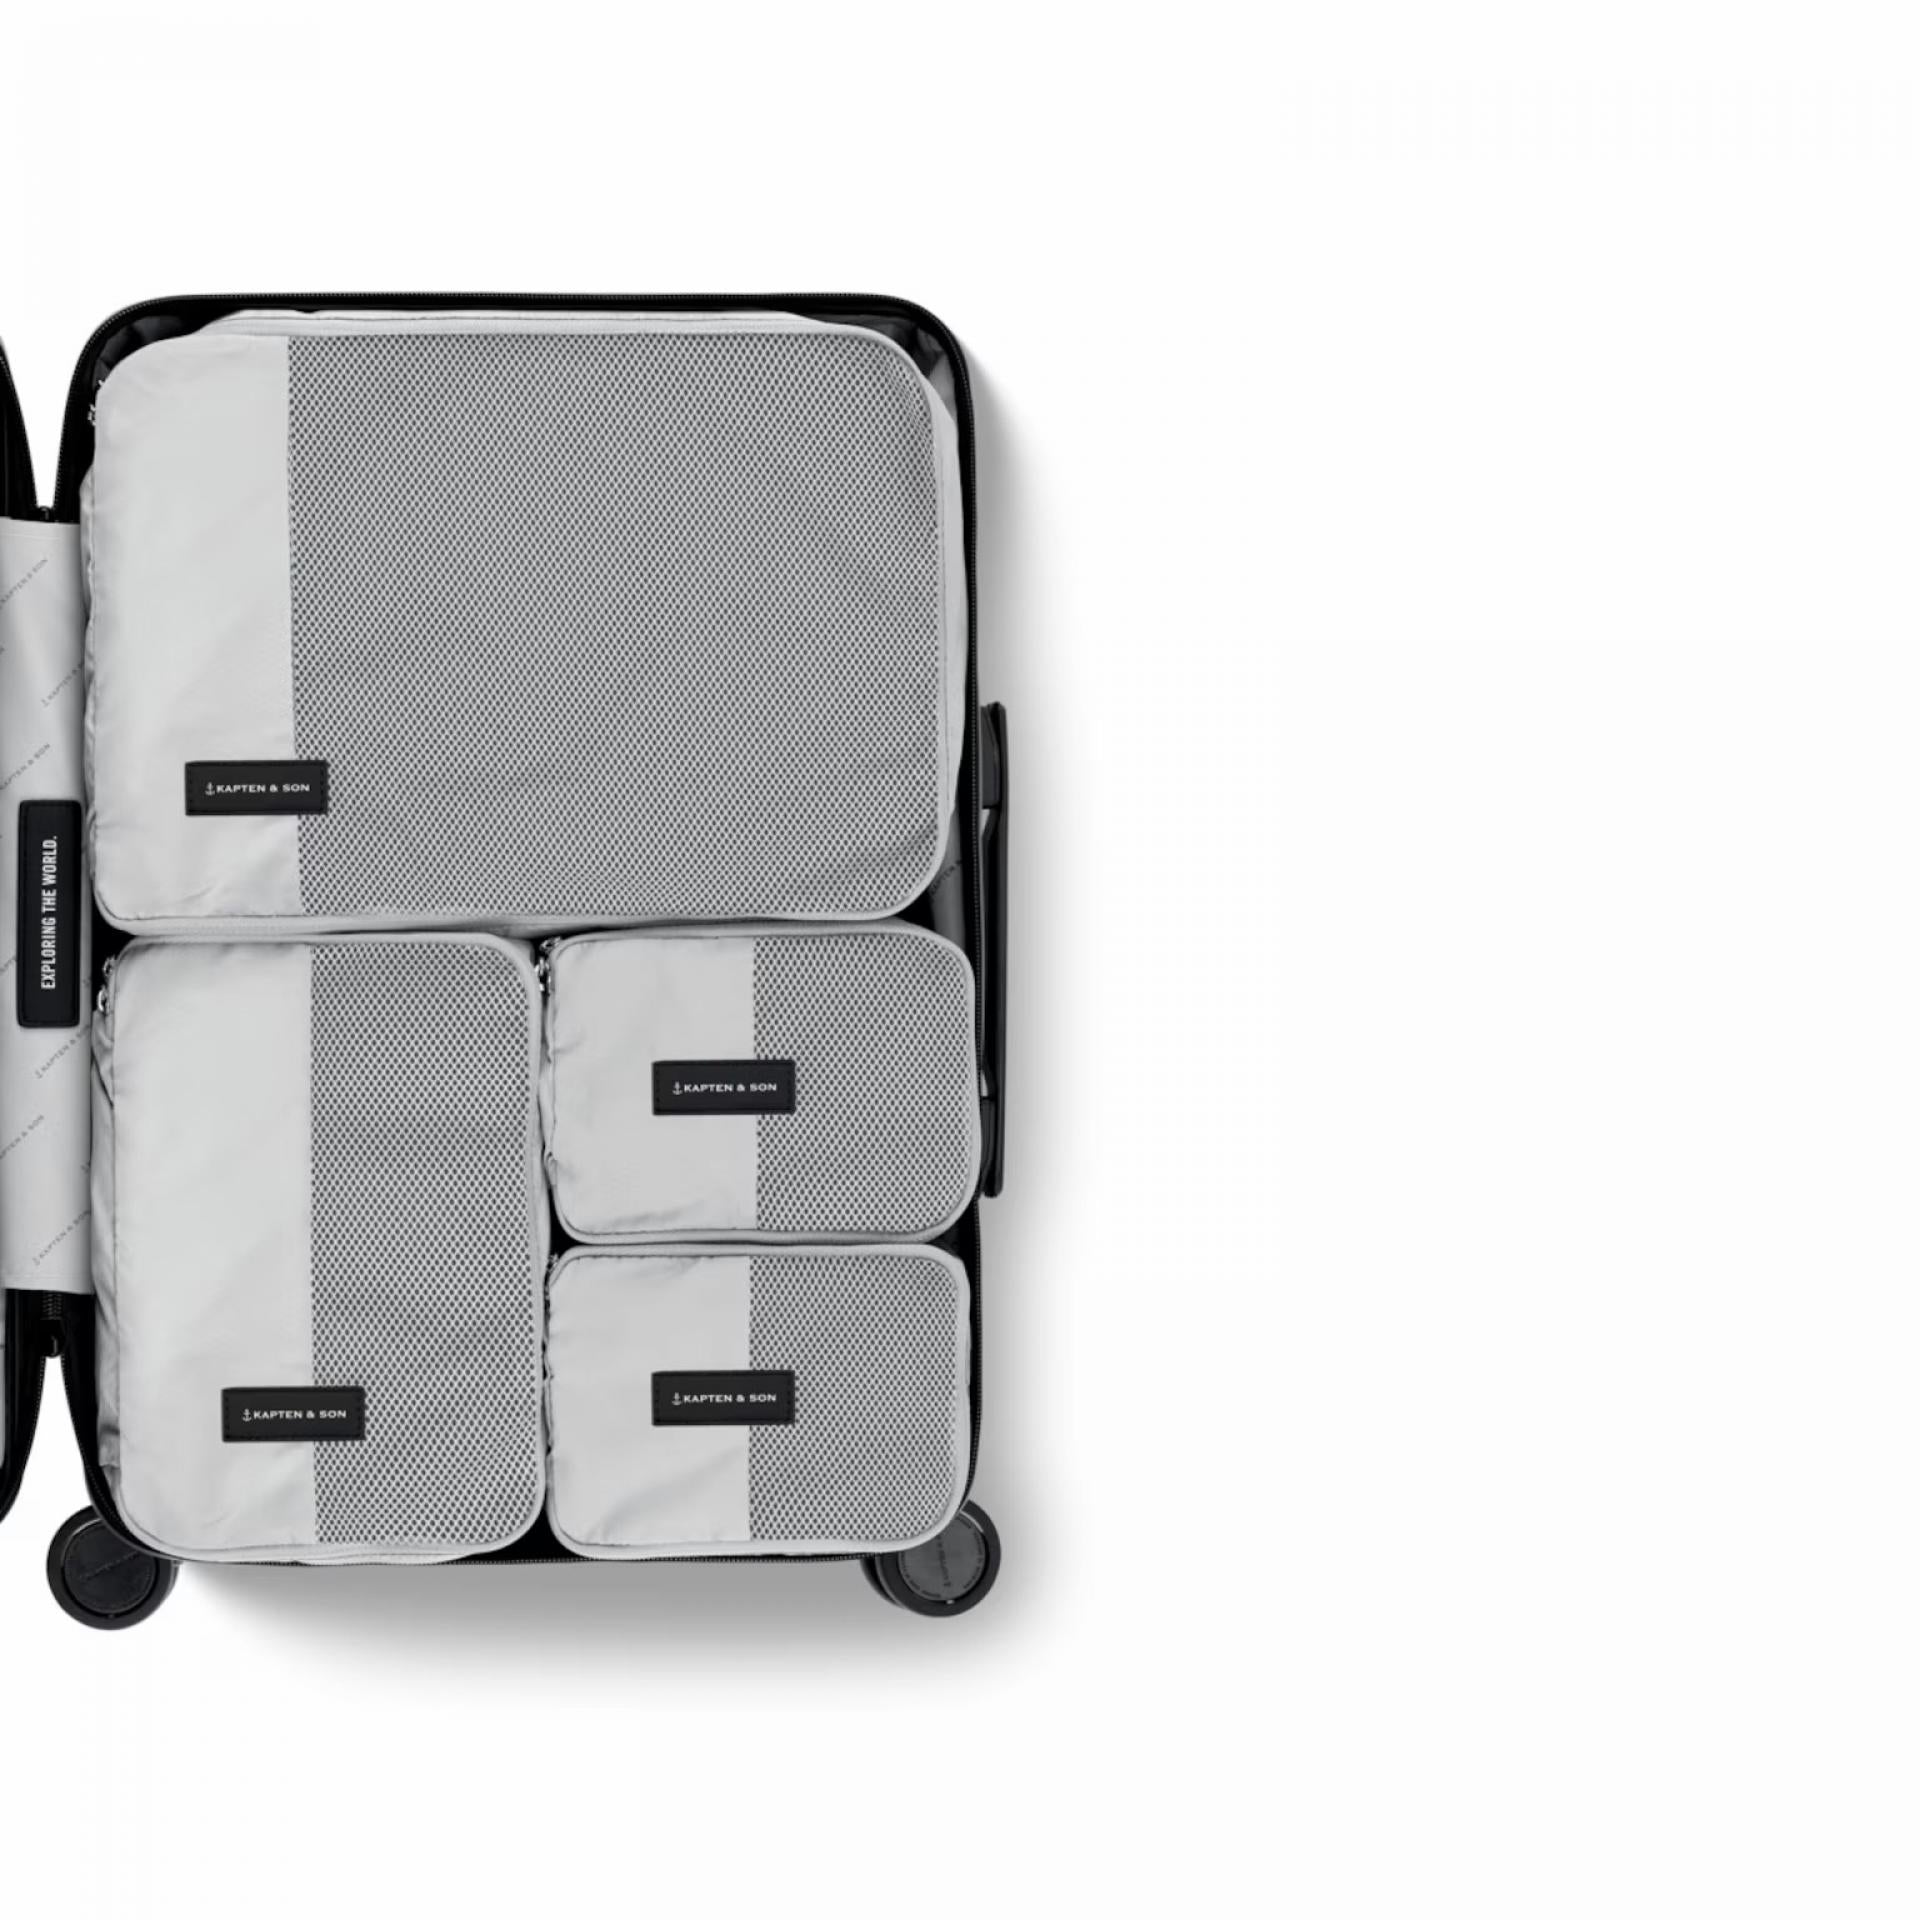 Kapten & Son Reise Packing Cubes Set Small All Black